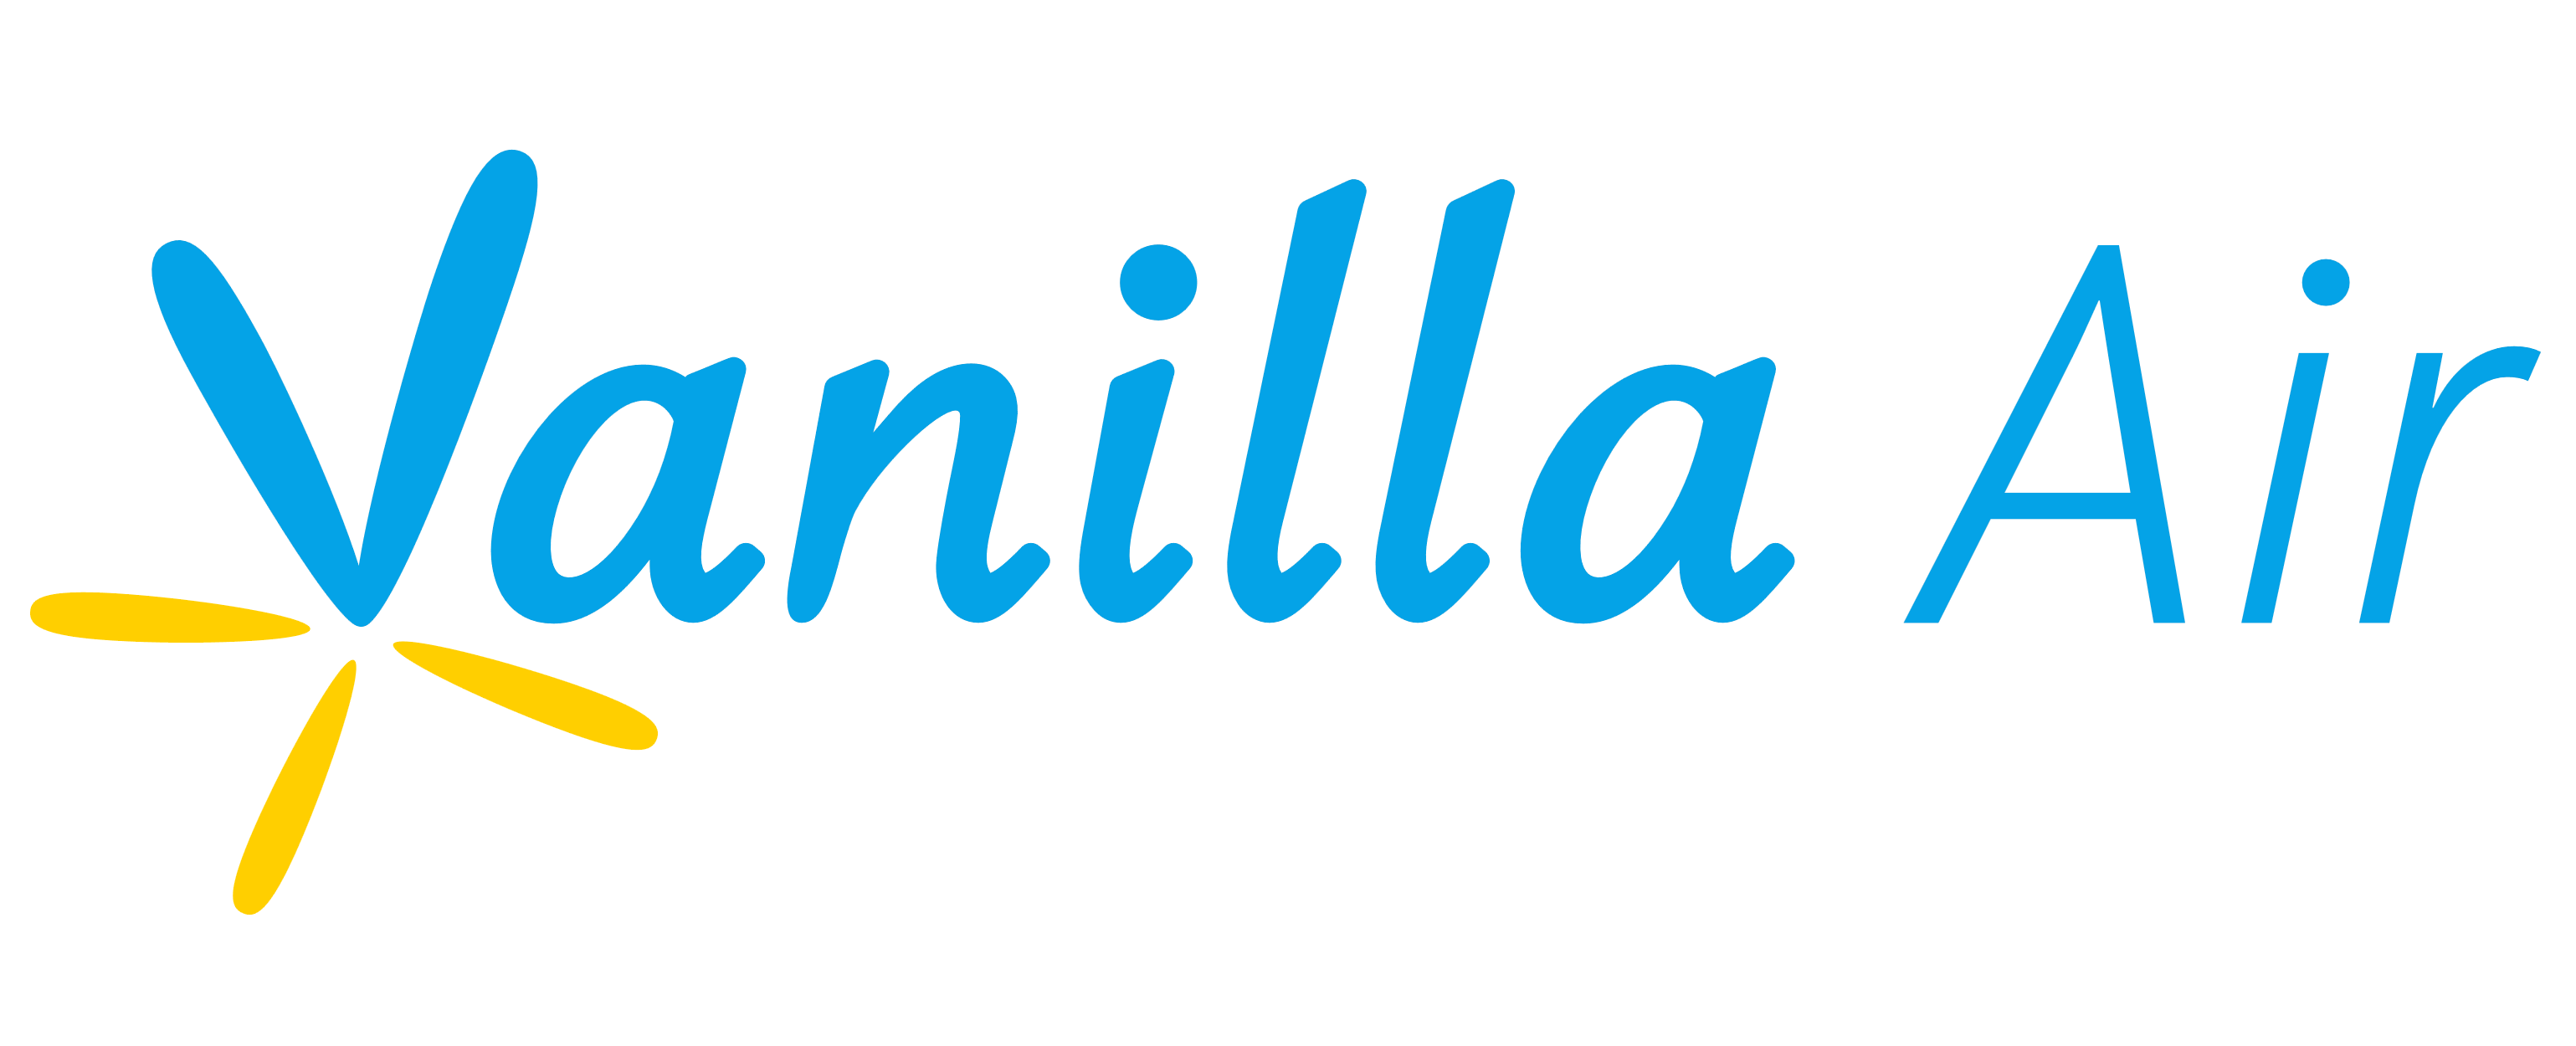 Vanilla Air logo, logotype